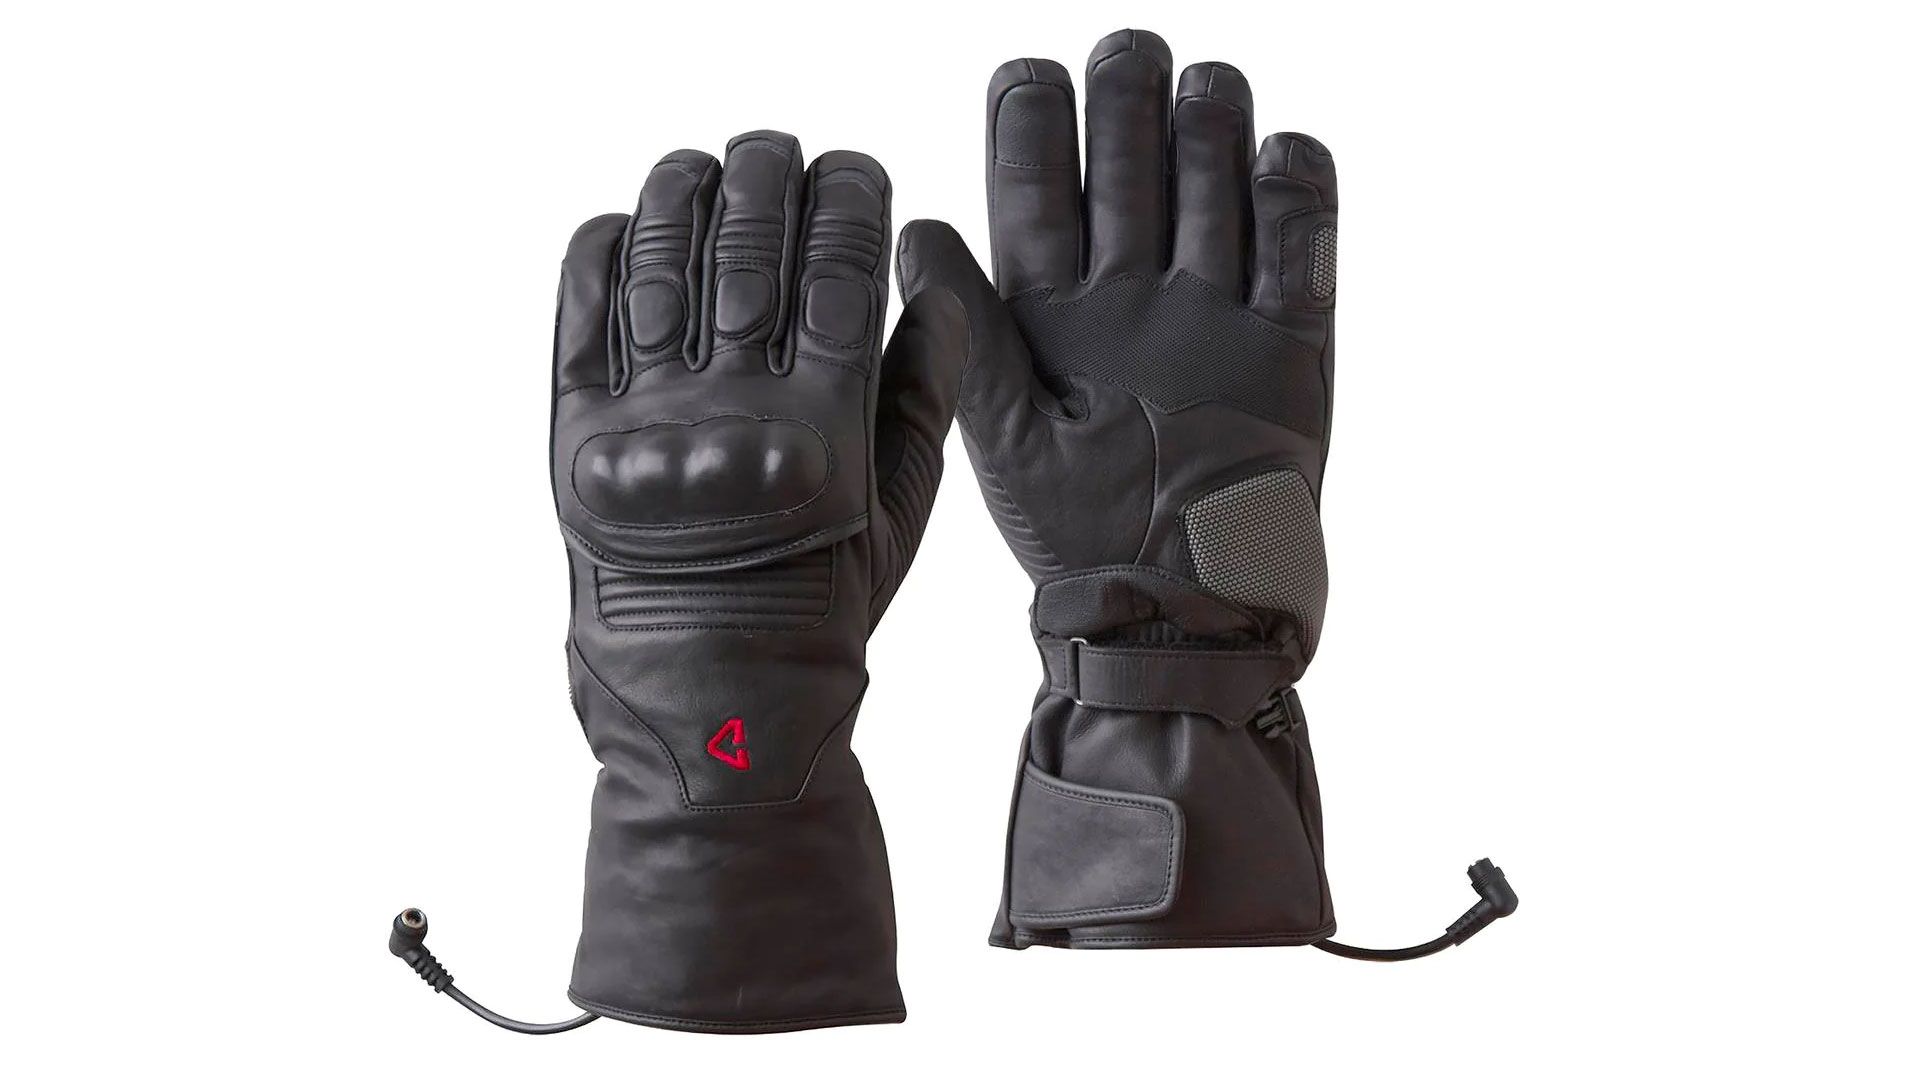 Photograph of Gerbing Vanguard Heated Gloves.